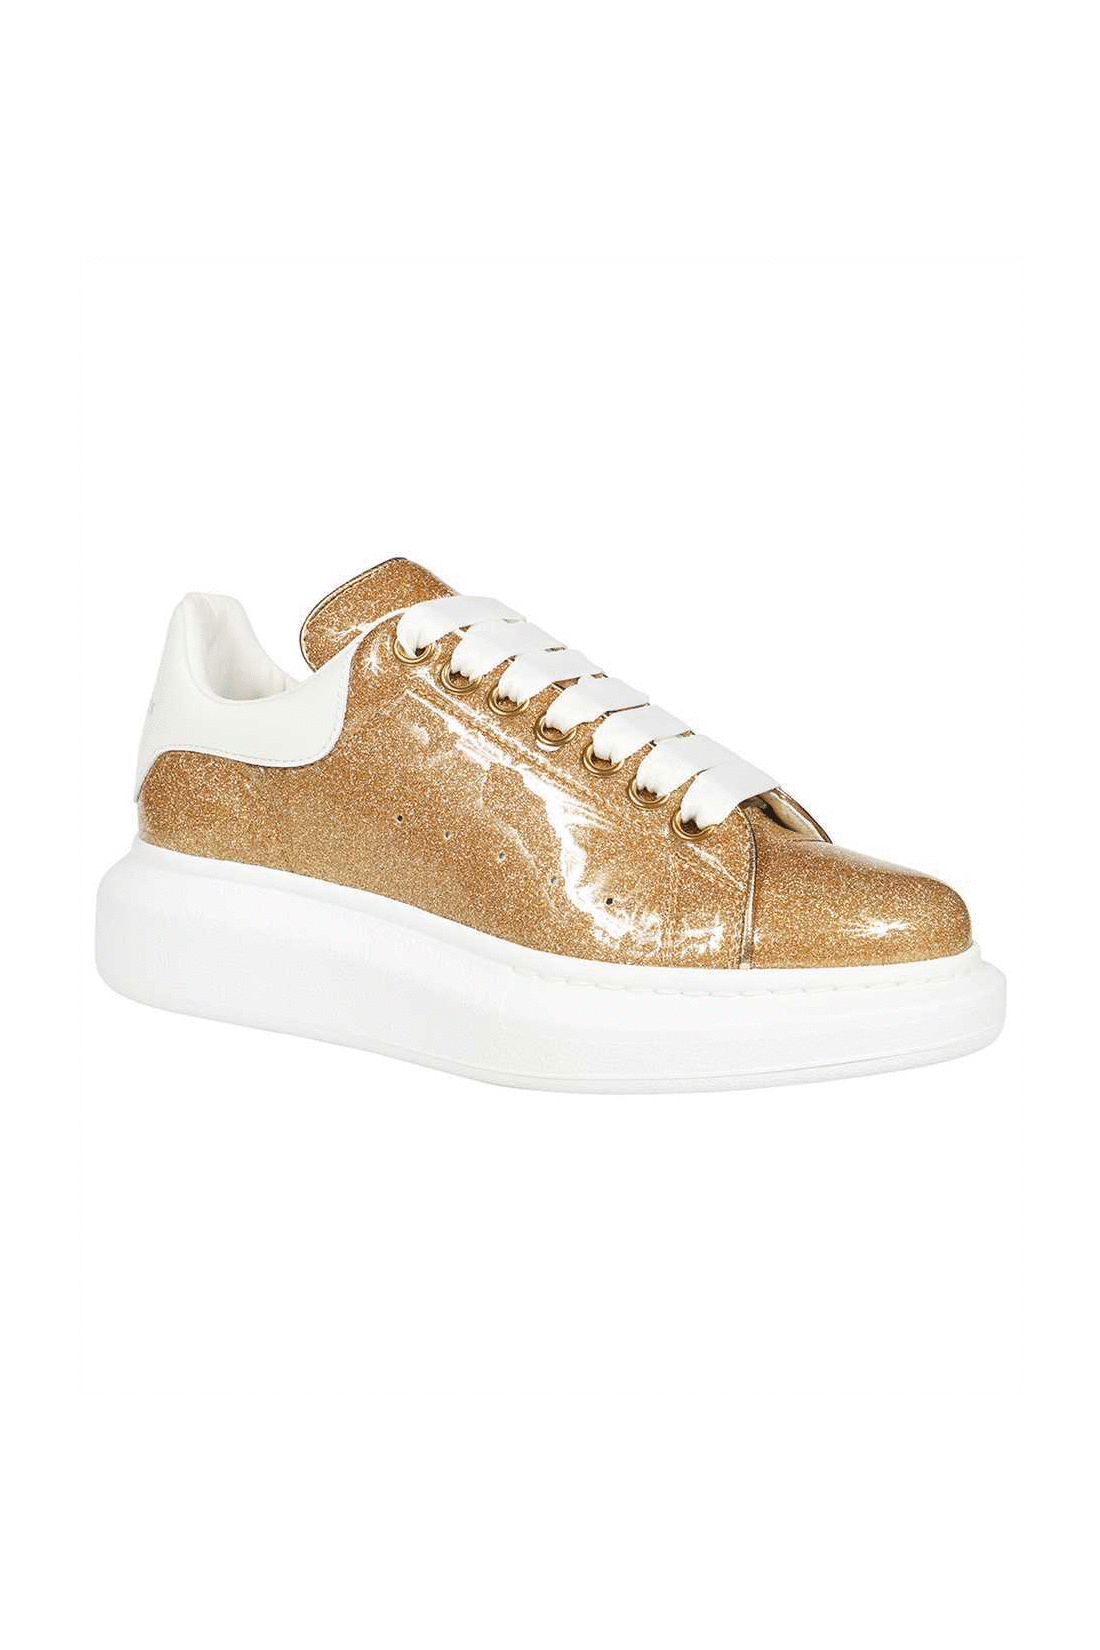 Larry glittered sneakers